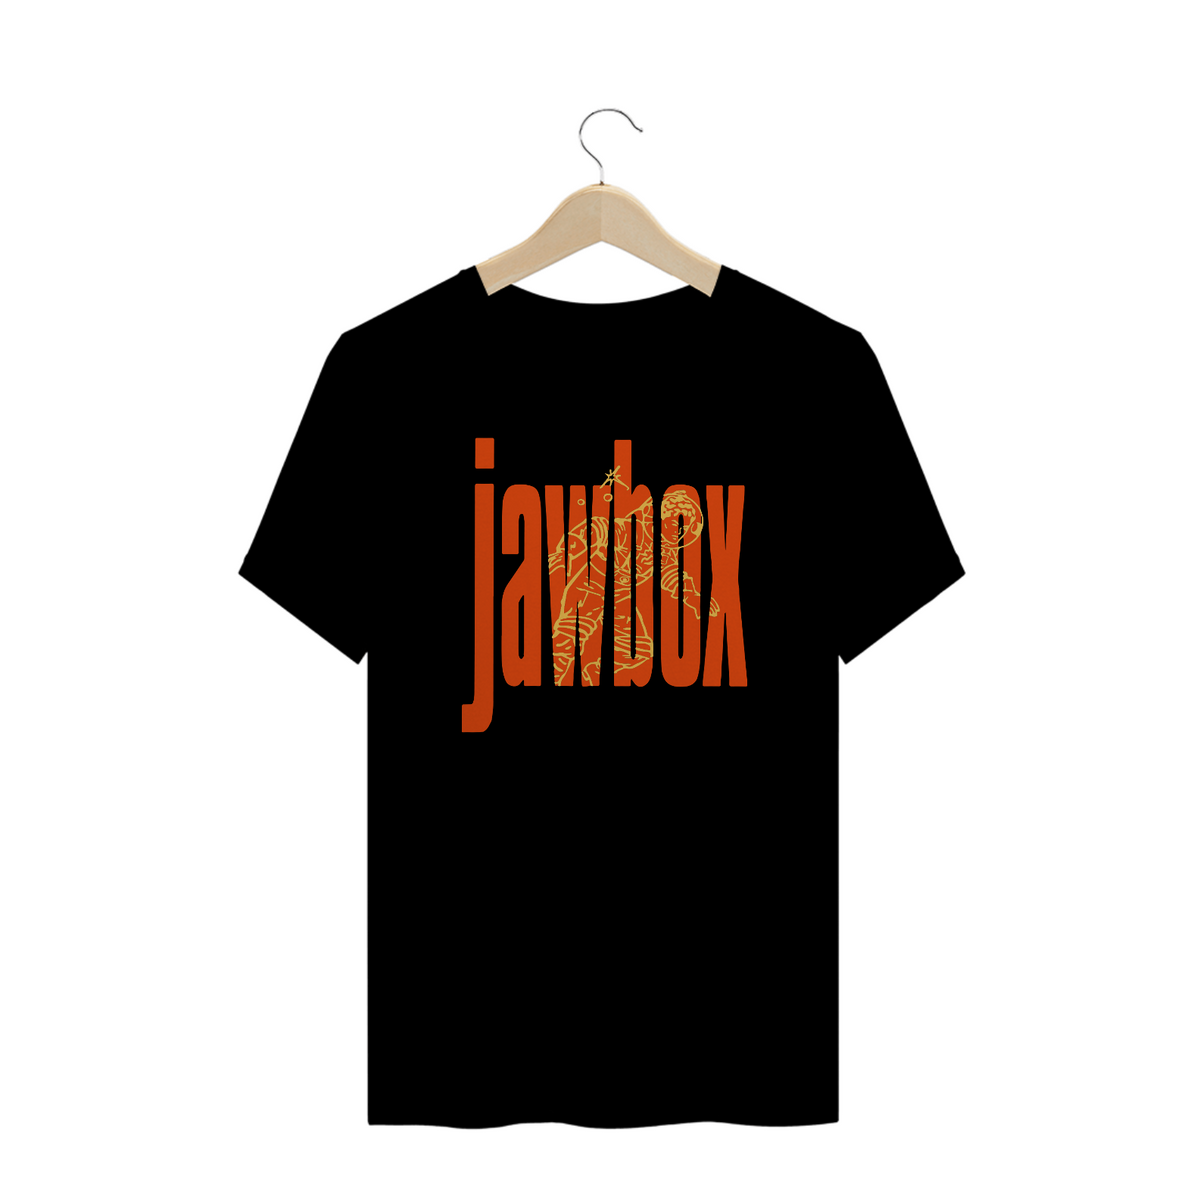 Nome do produto: Jawbox - Plus Size